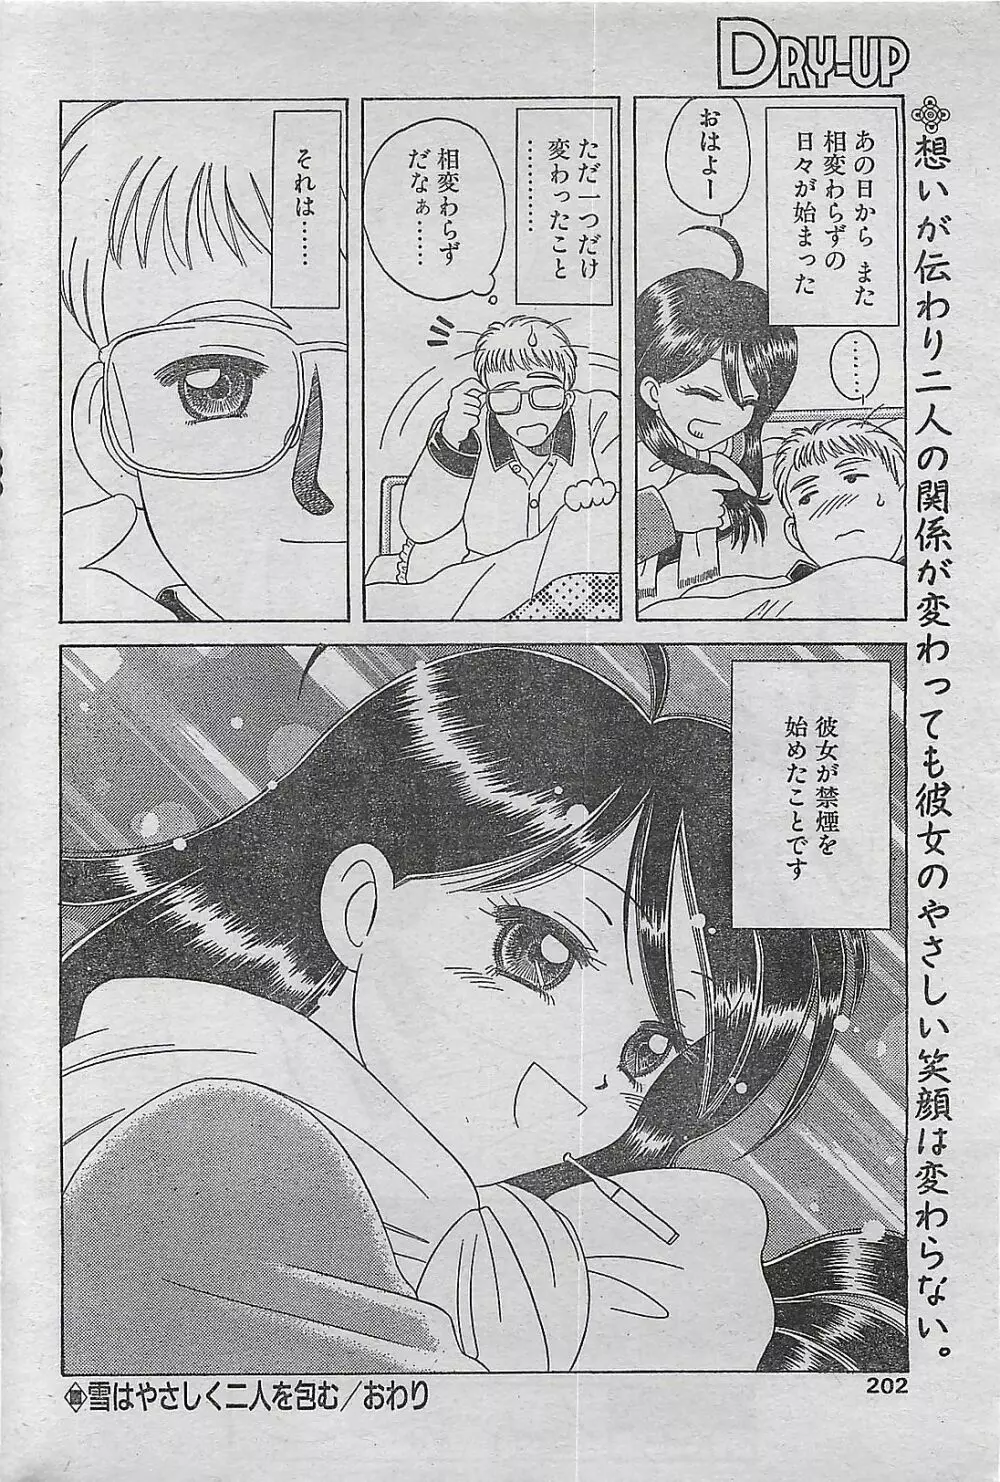 COMIC ドライ-アップ No.4 1995年02月号 202ページ